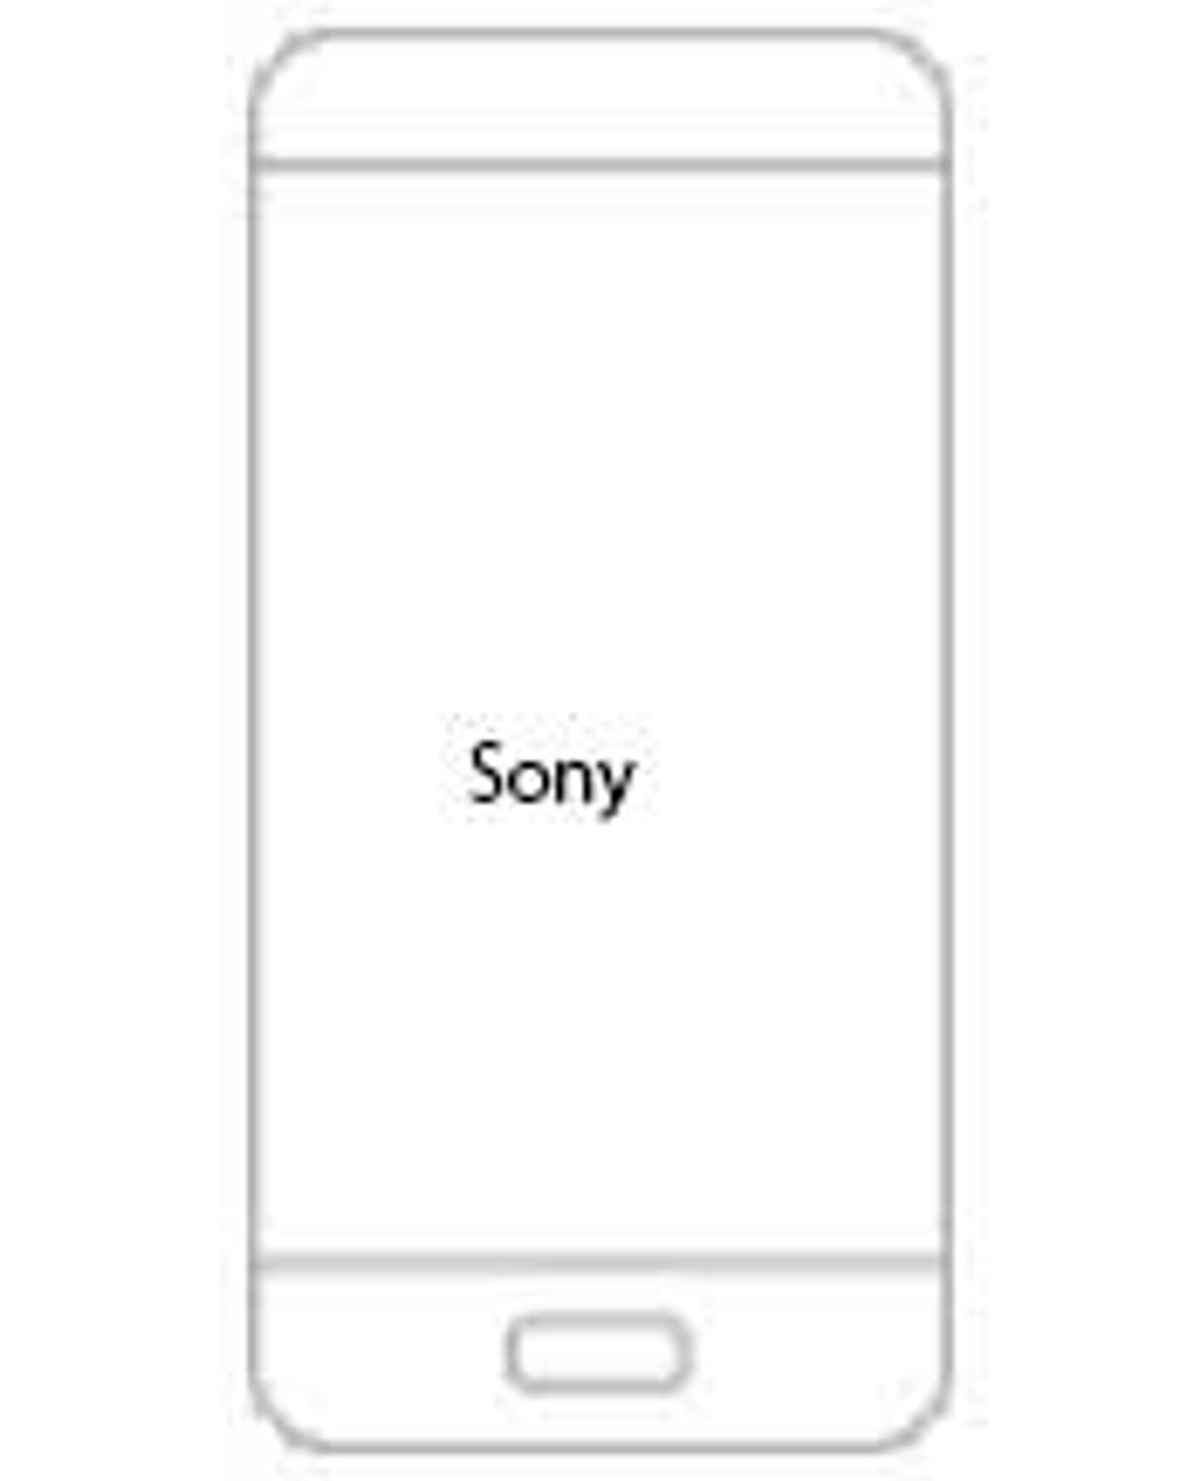 Sony Xperia L4